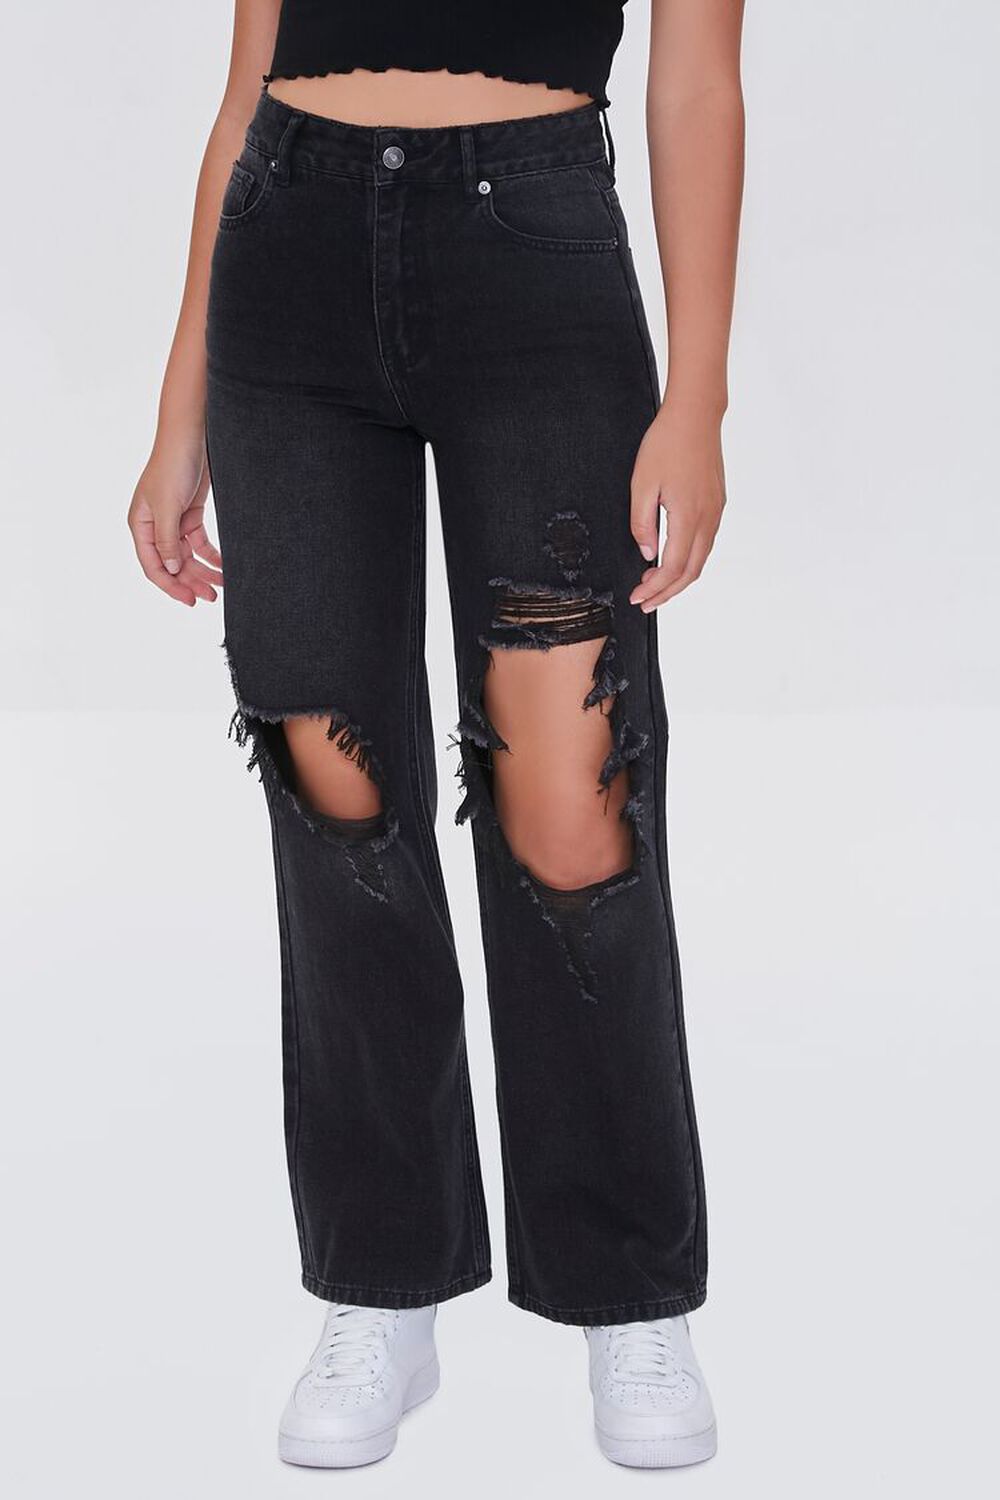 DENIM BLACK Distressed Straight-Leg Jeans, image 2